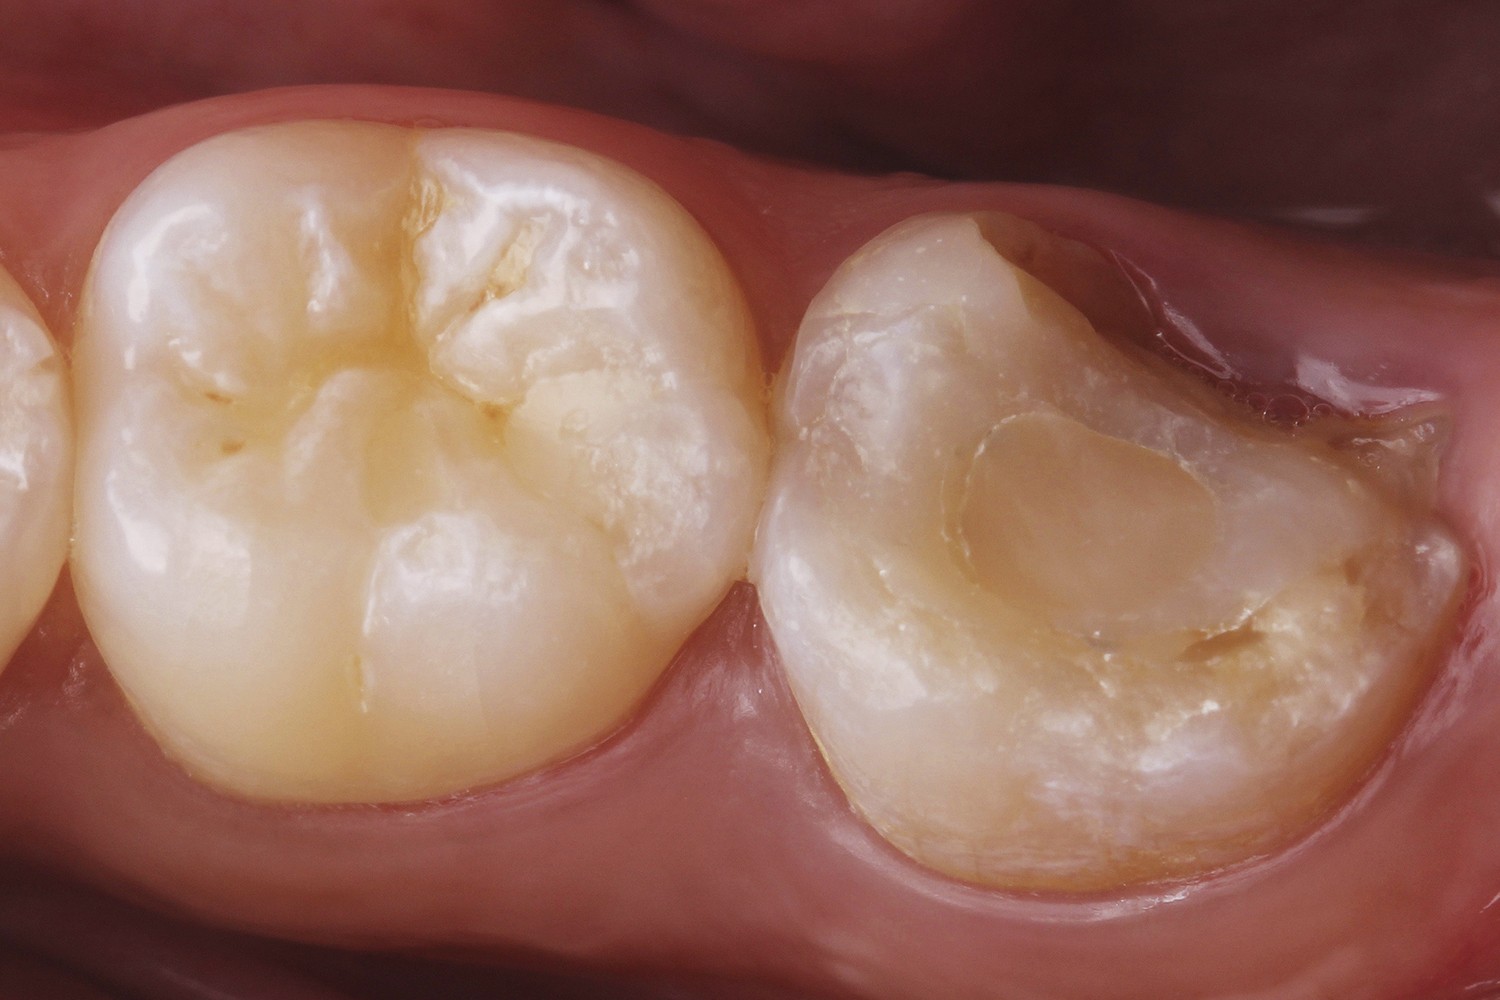 Tratamento conservador para fratura dental envolvendo cúspide: Relato de caso clínico